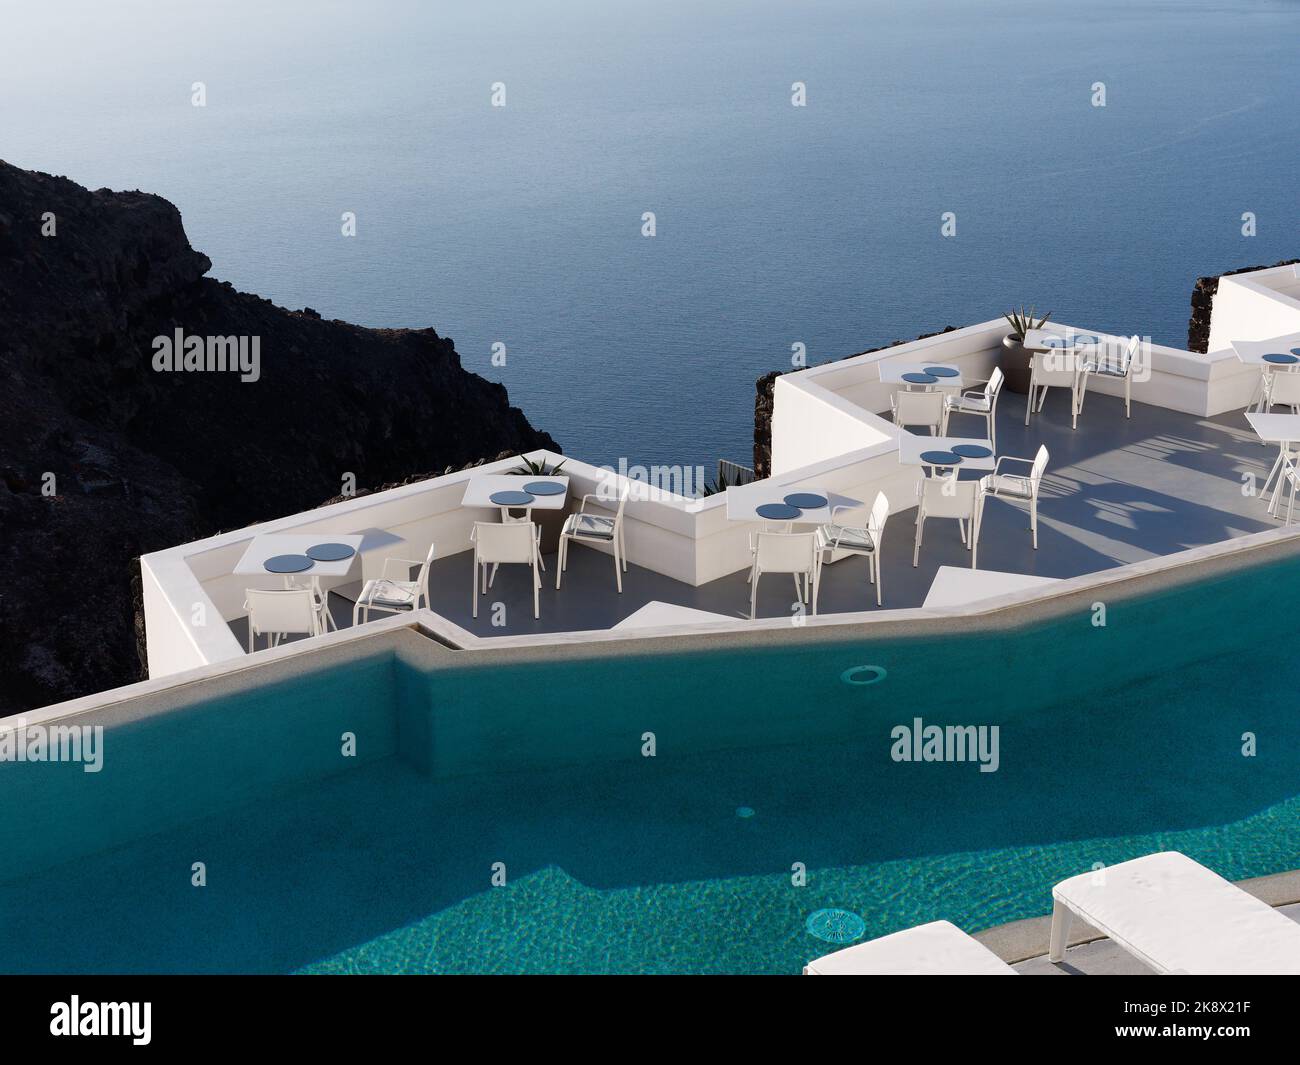 Luxury hotel swimming pool view over the Caldera. Aegean Cyclades Island of Santorini, Greece. Stock Photo